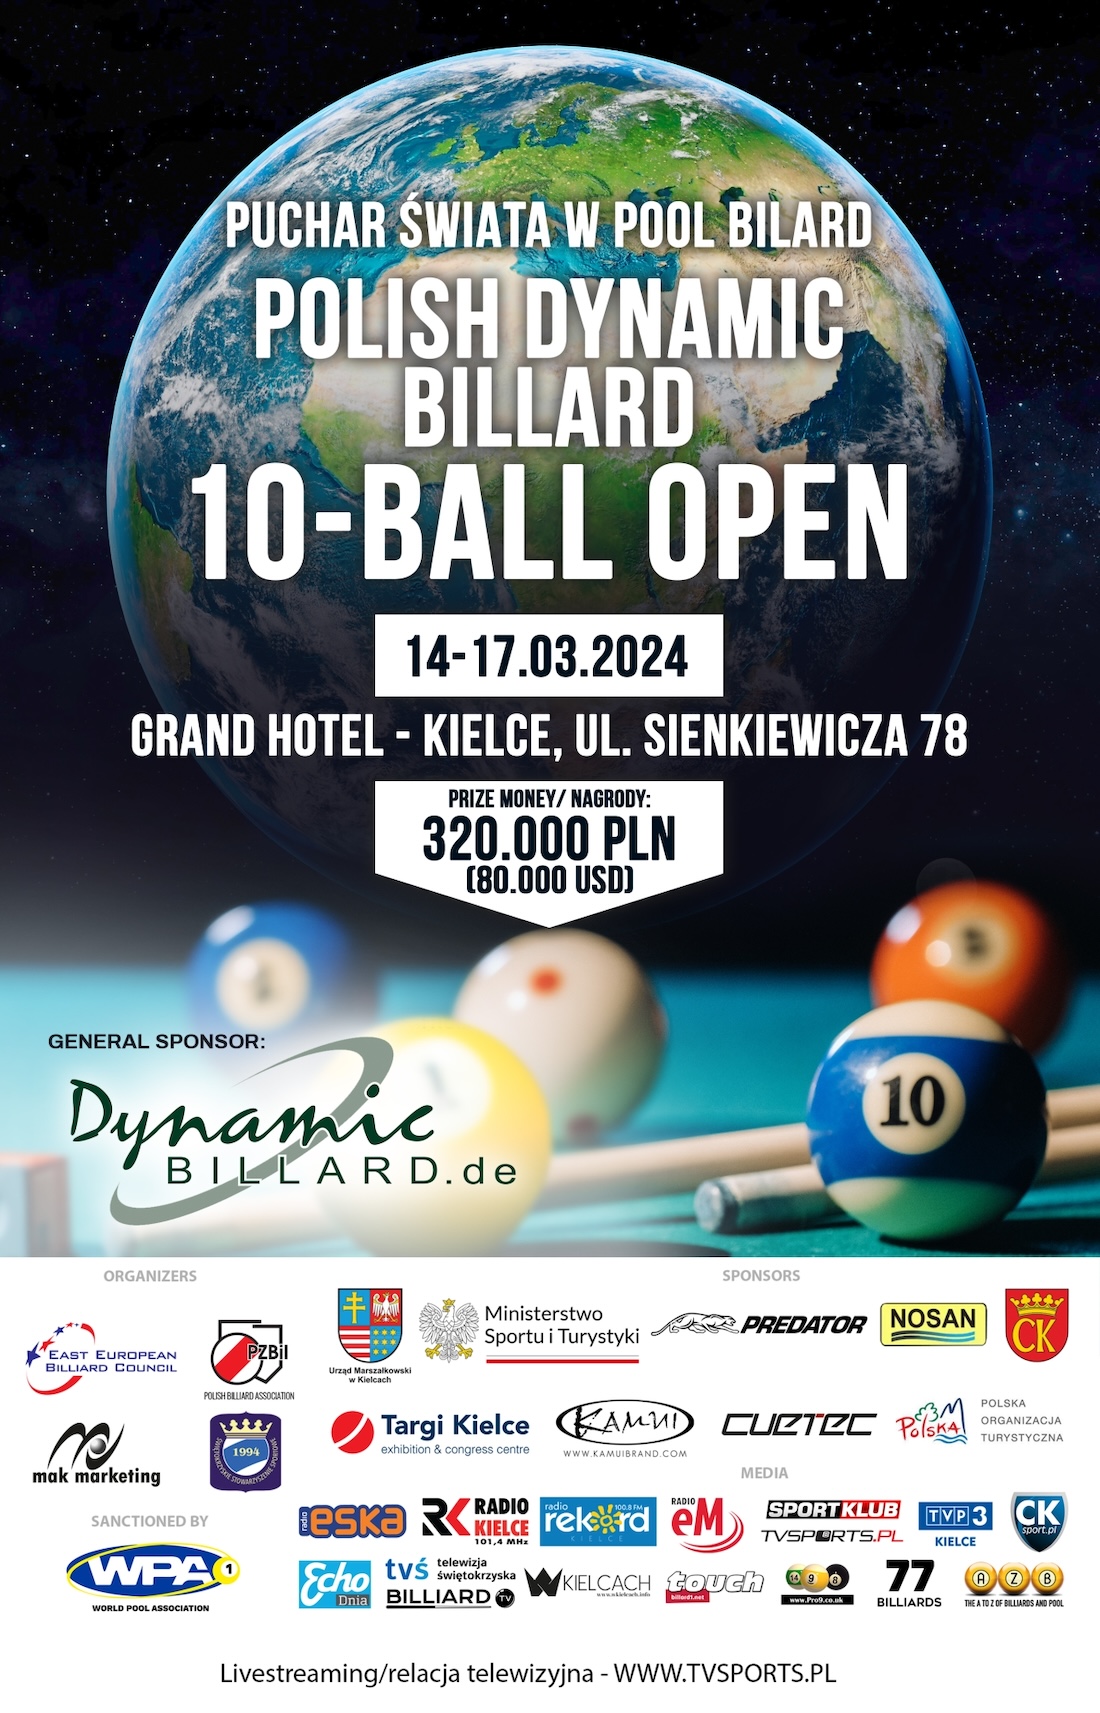 WPA Pool | Kielce inaugurated the Polish Dynamic Billard 10-Ball Open World Cup!